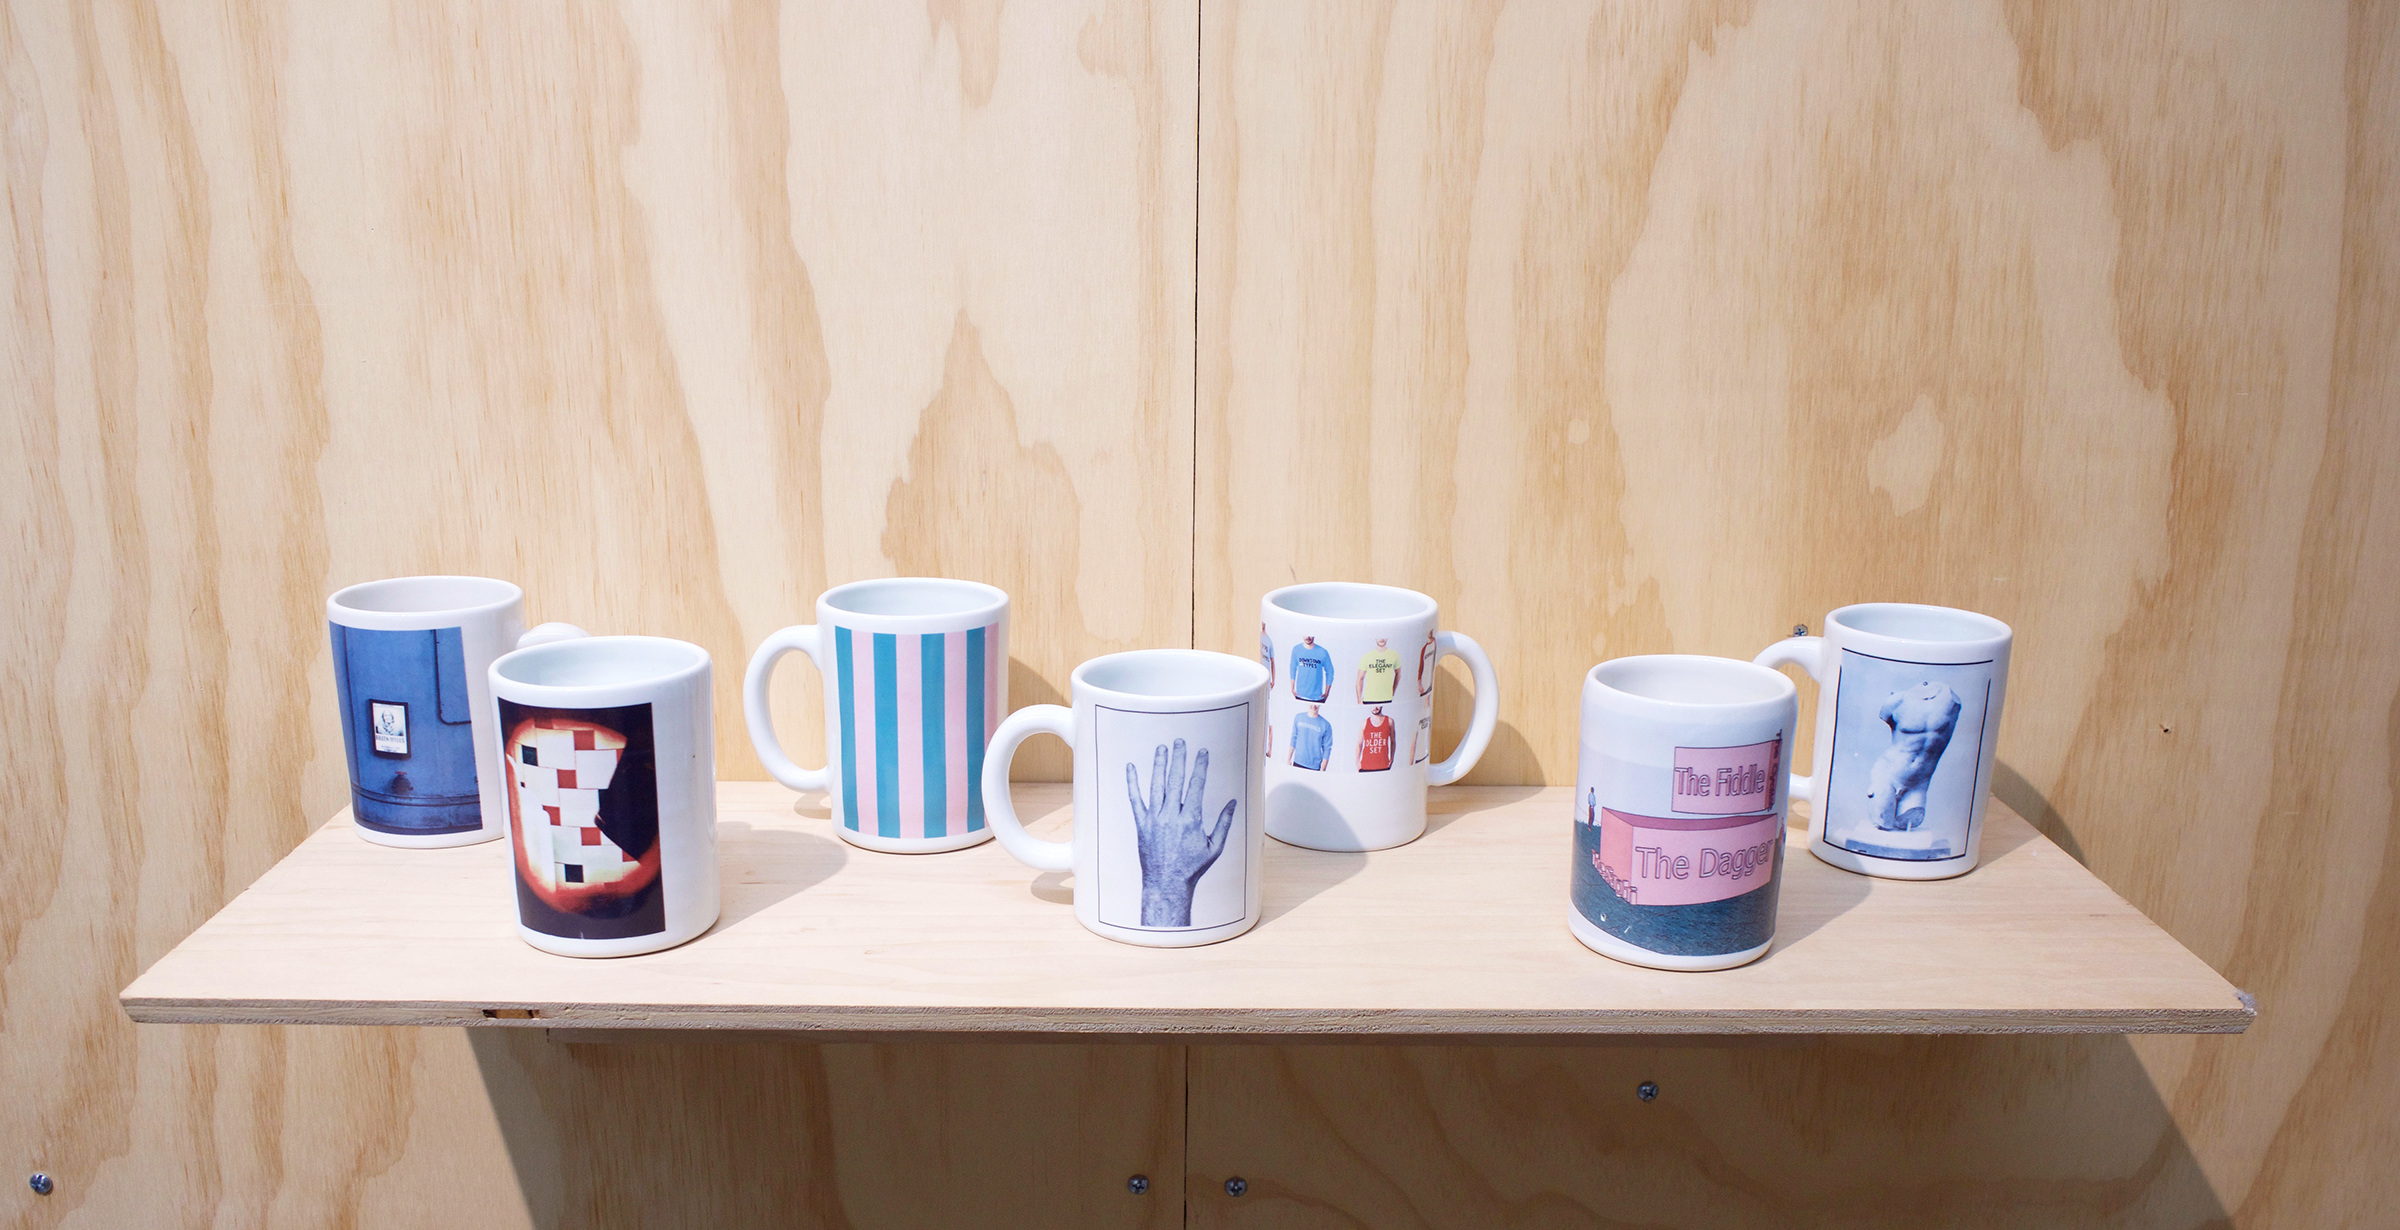  Erik Scollon Shelf #2, 2018 7 individual handmade porcelain mugs with artist made ceramic decals, glaze and wooden shelf, 6” x 32” x 11" 